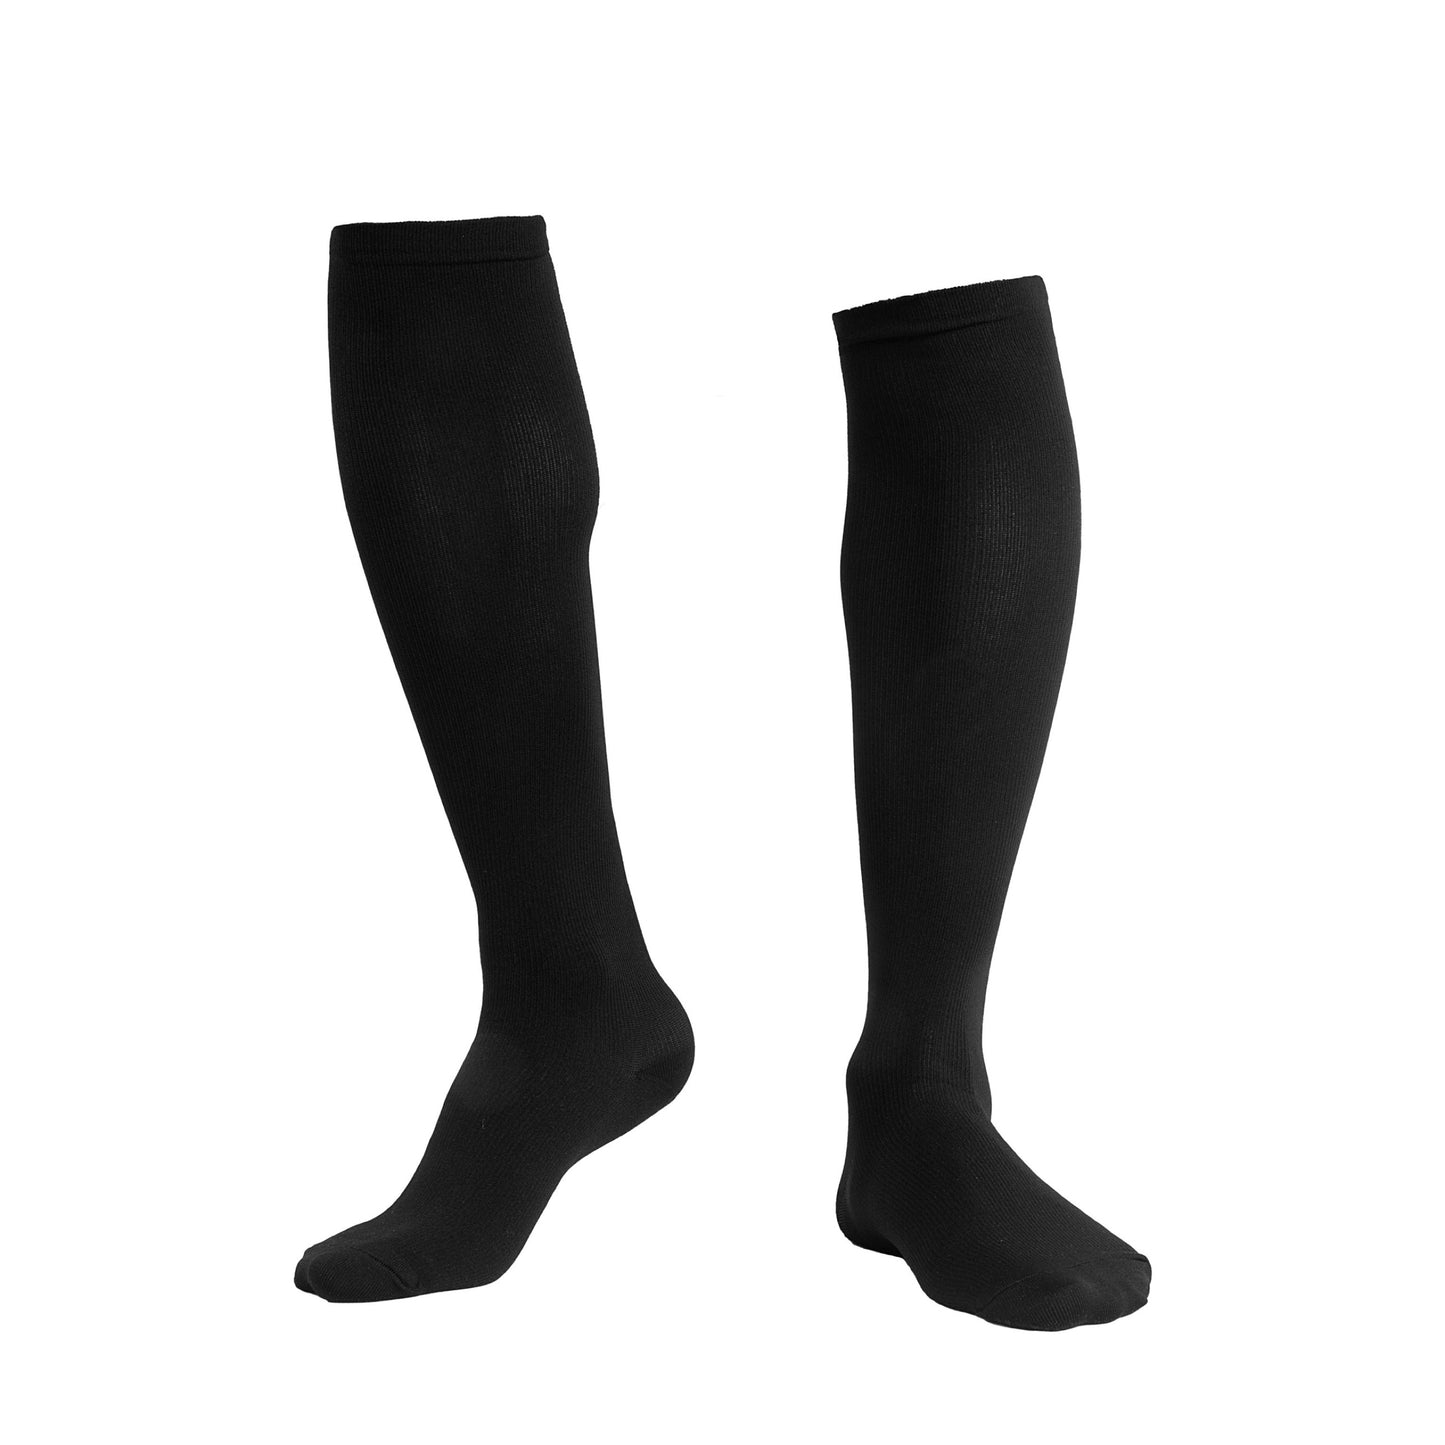 vocksies compression travel socks for pilots and travellers, compression socks for everyday use, black socks, airplane on sole 